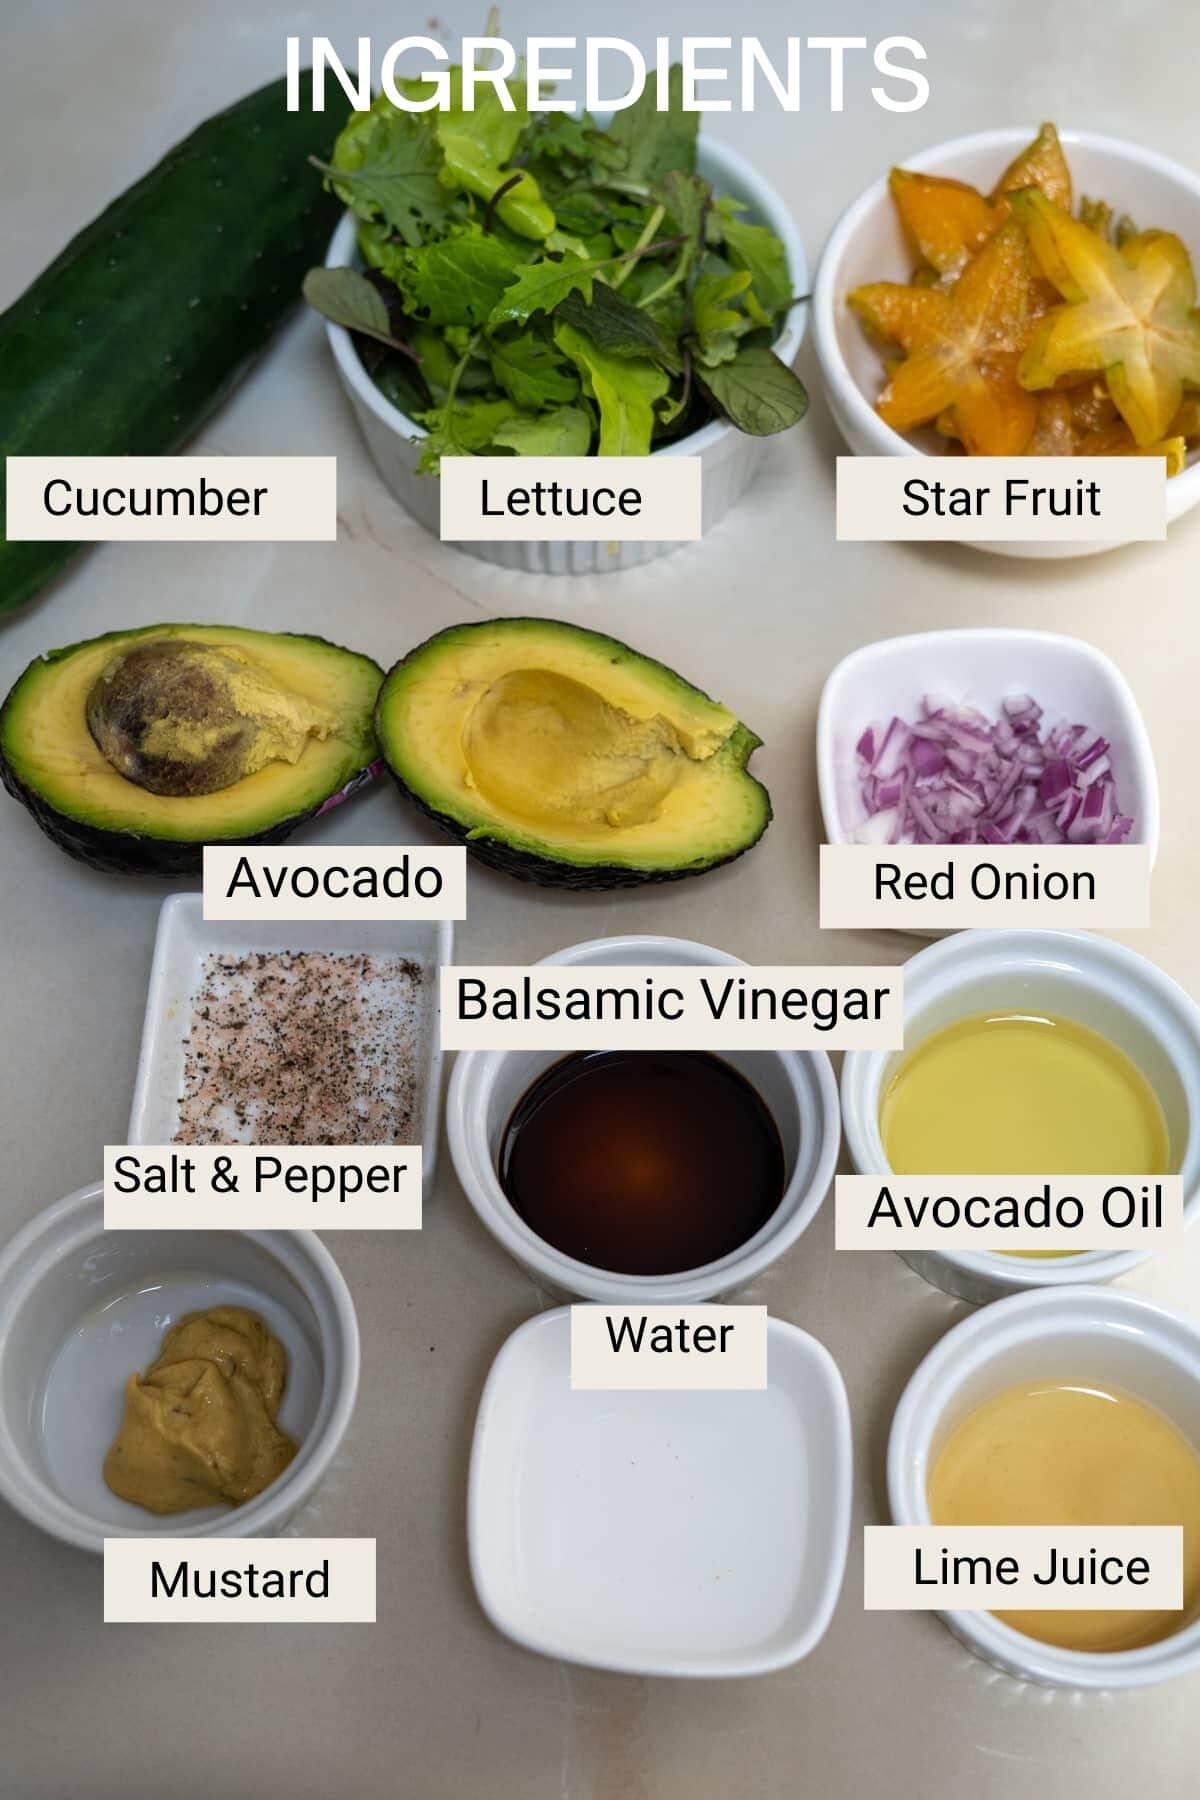 star fruit salad ingredients